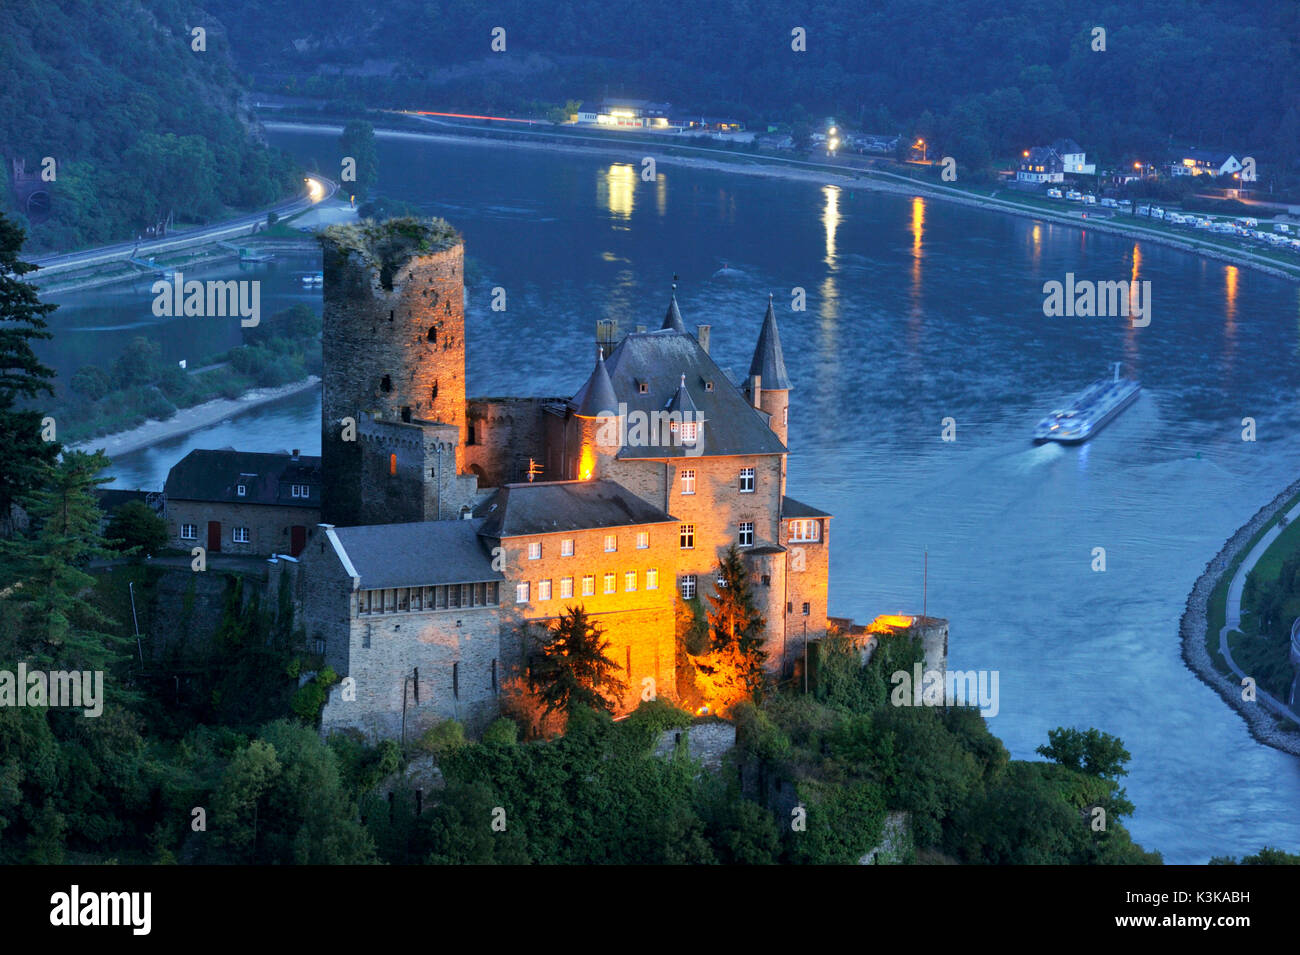 Germany, Rhineland-Palatinate, Sankt-Goarshausen, (Burg) castle of Katz, the romantic Rhine listed as World Heritage by UNESCO Stock Photo